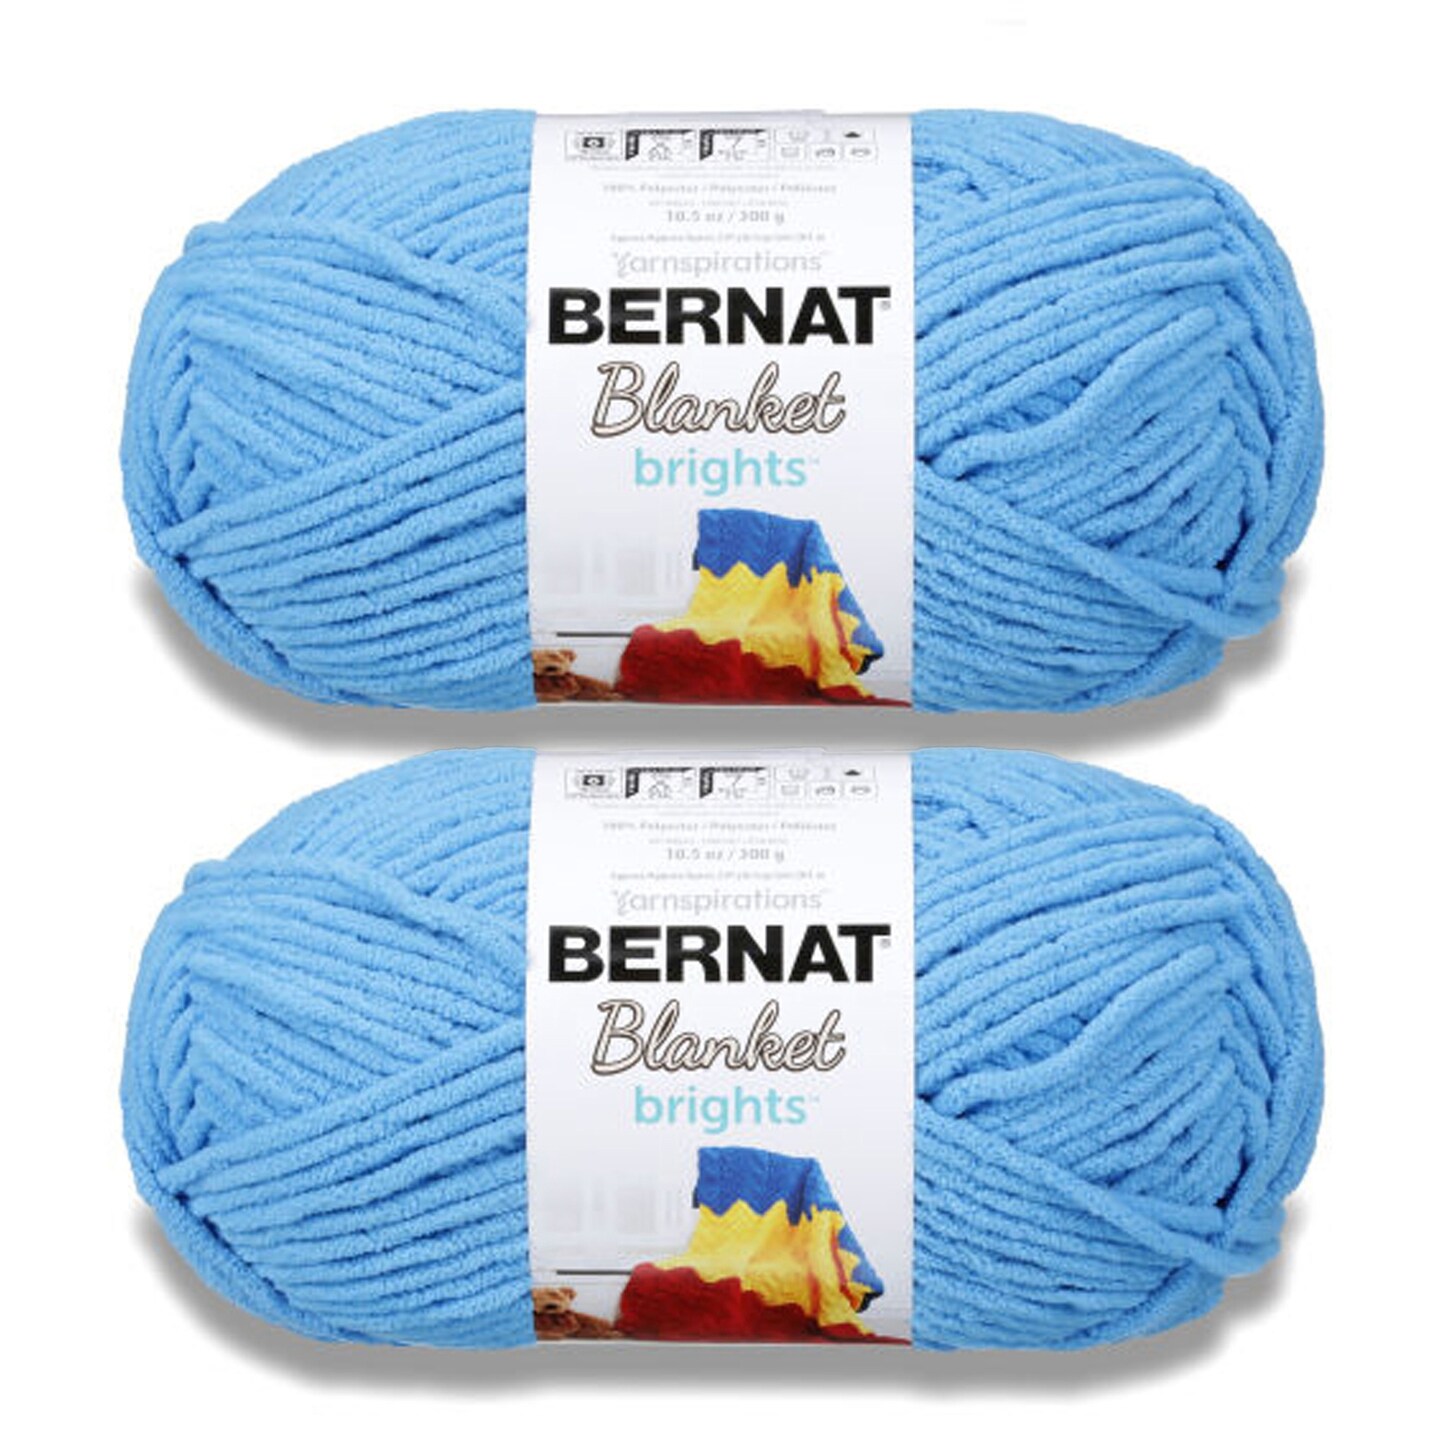 Bernat Blanket Brights Busy Blue Yarn - 2 Pack of 300g/10.5oz - Polyester -  6 Super Bulky - 220 Yards - Knitting/Crochet